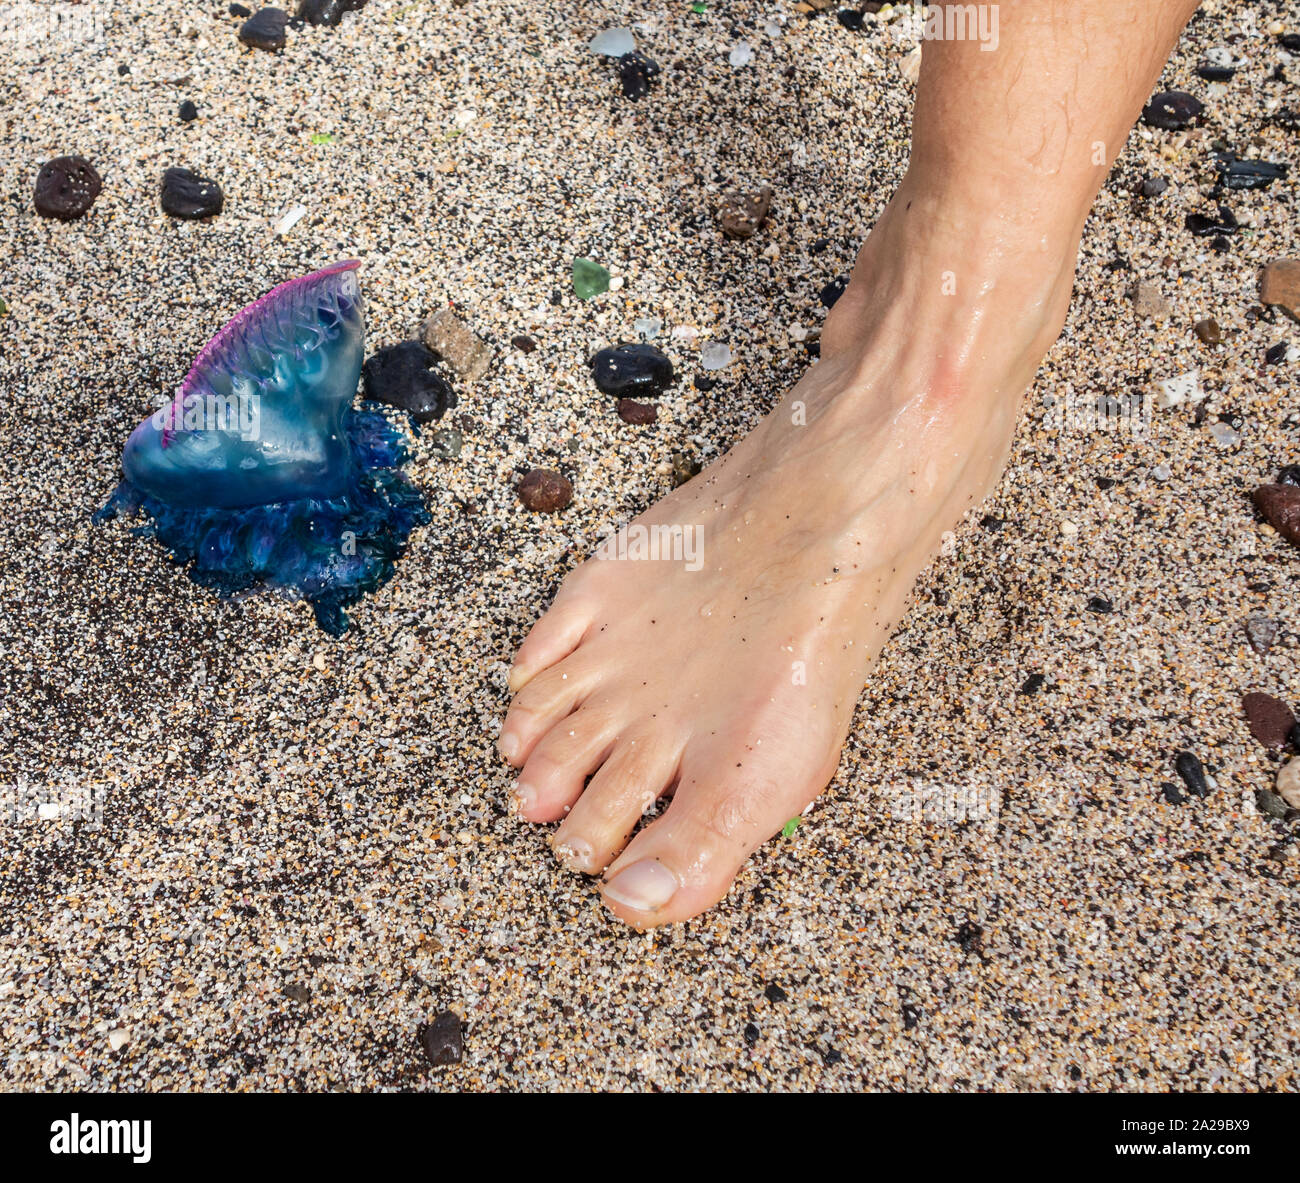 Portuguese man o' war jellyfish on beach in Spain. Stock Photo